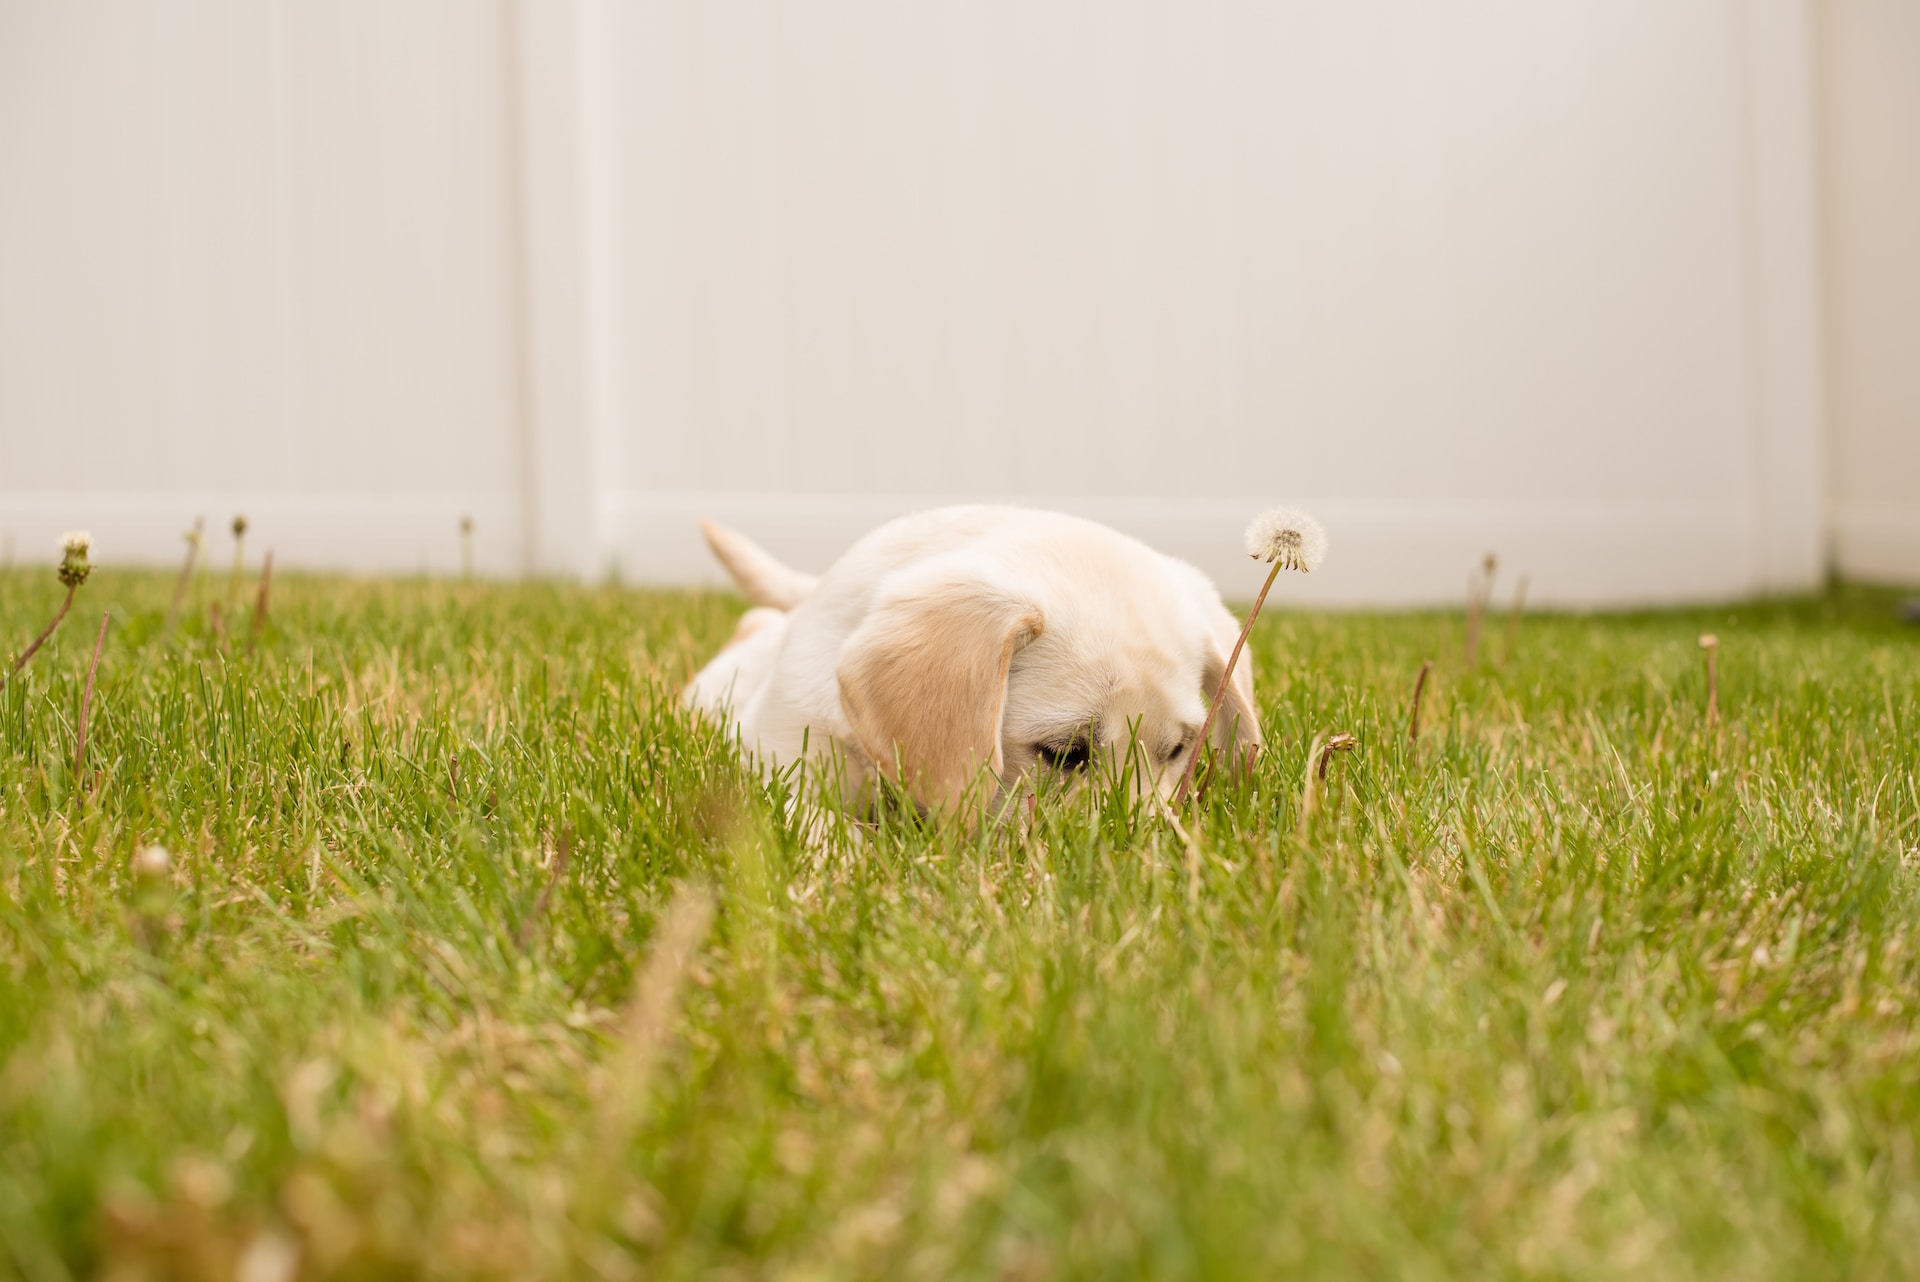 An anxious puppy hiding in a grassy lawn